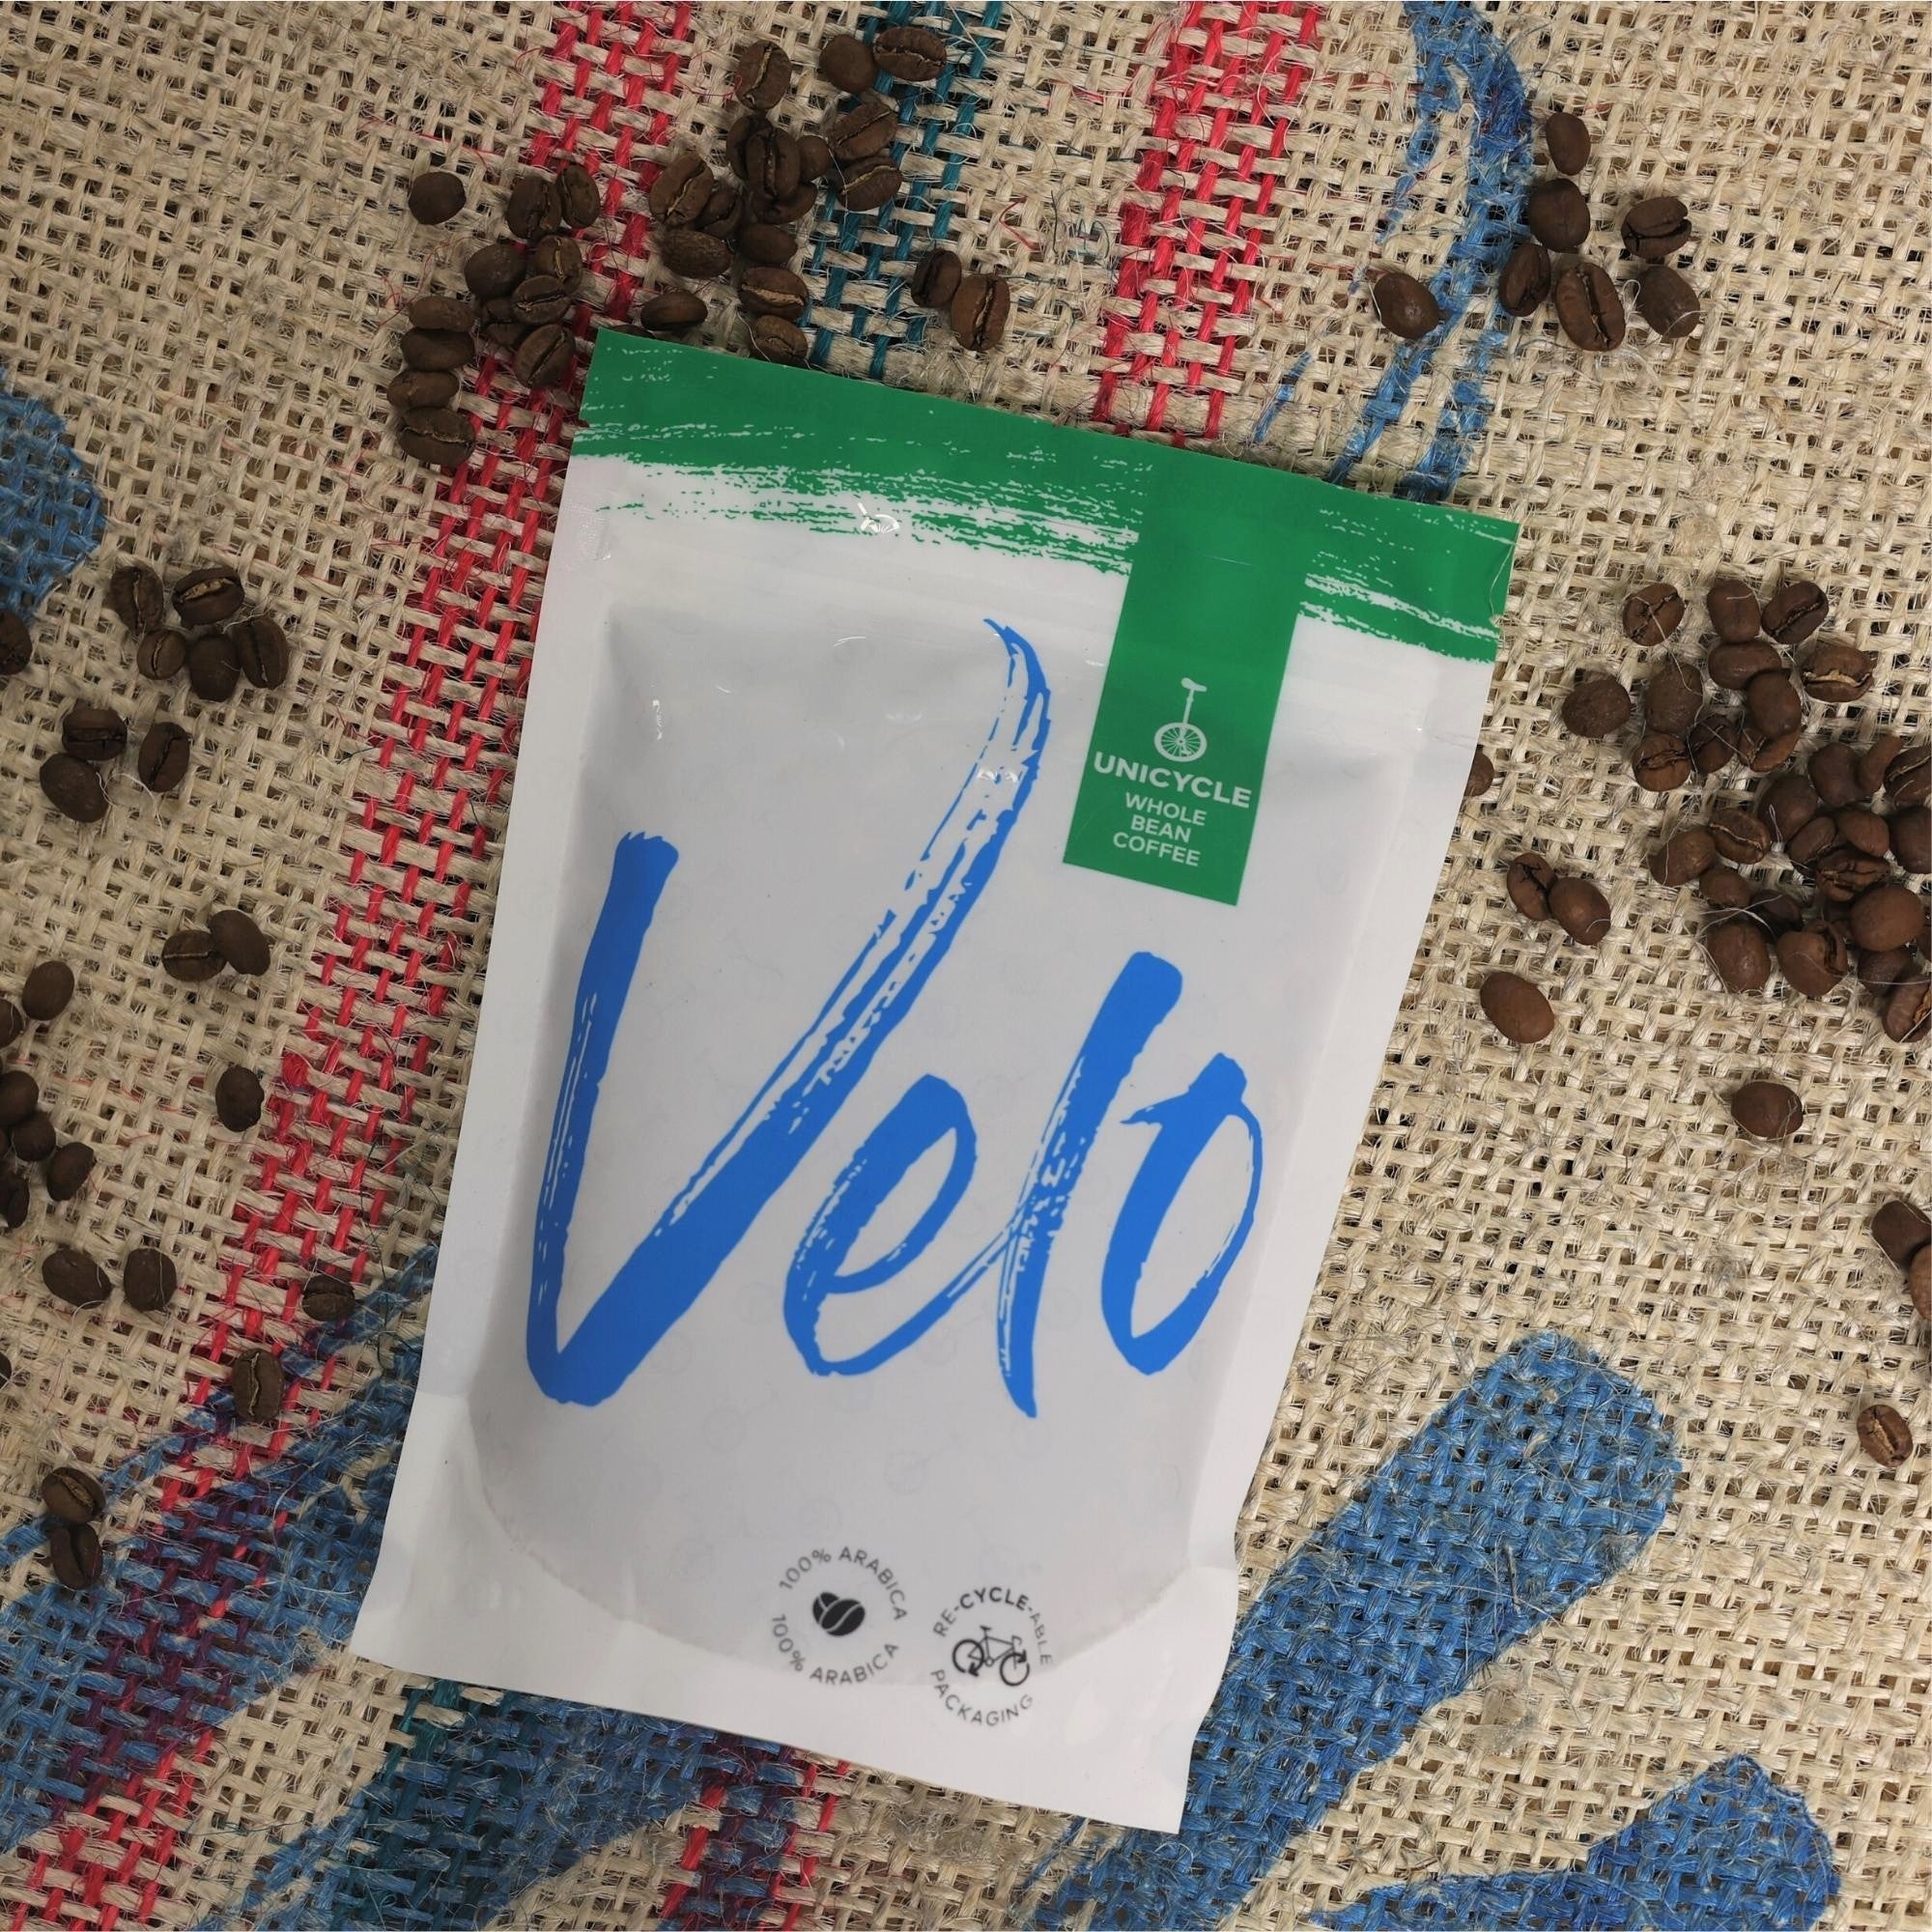 Mexico Innovation Extended Fermentation 200g Coffee Bag Mexico - Velo Coffee Roasters